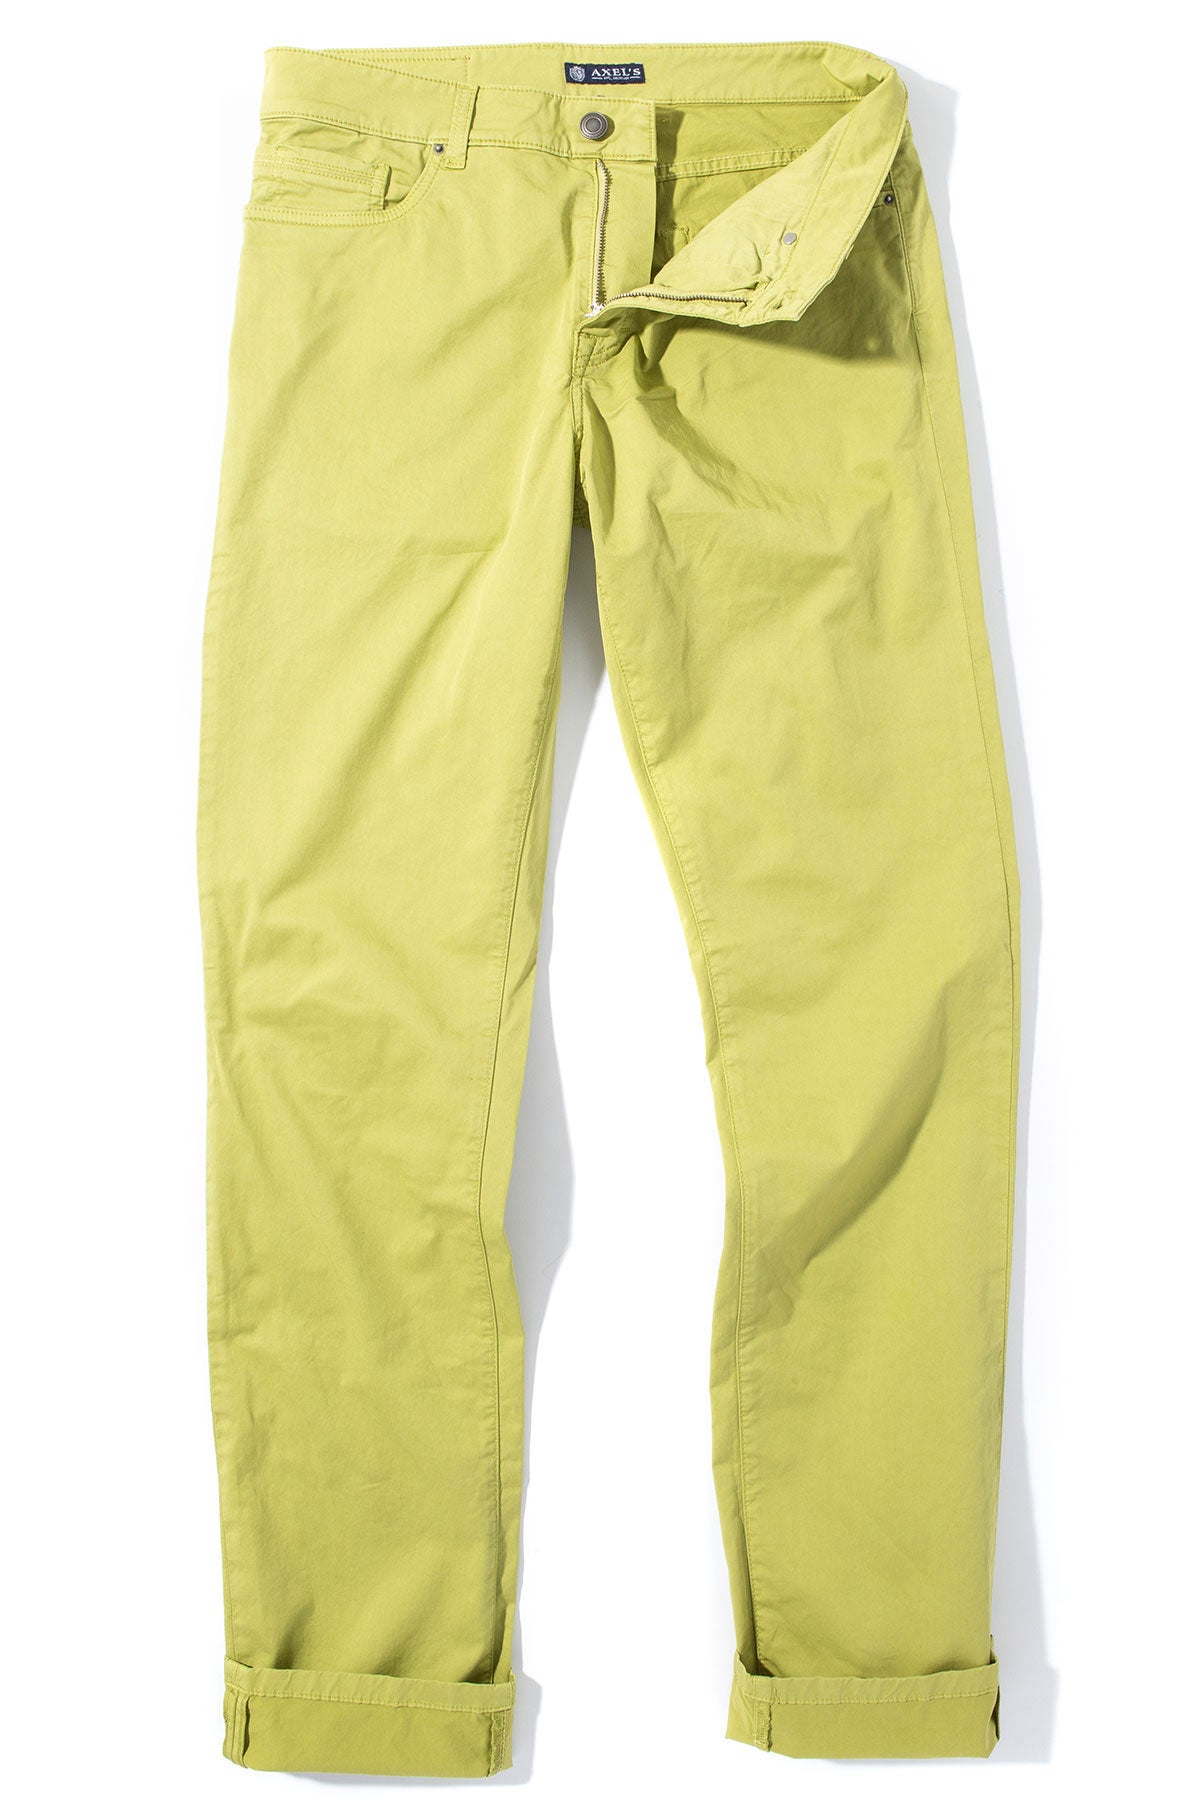 Mickelson Ultralight Performance Pant In Lime | Mens - Pants - 5 Pocket | Teleria Zed